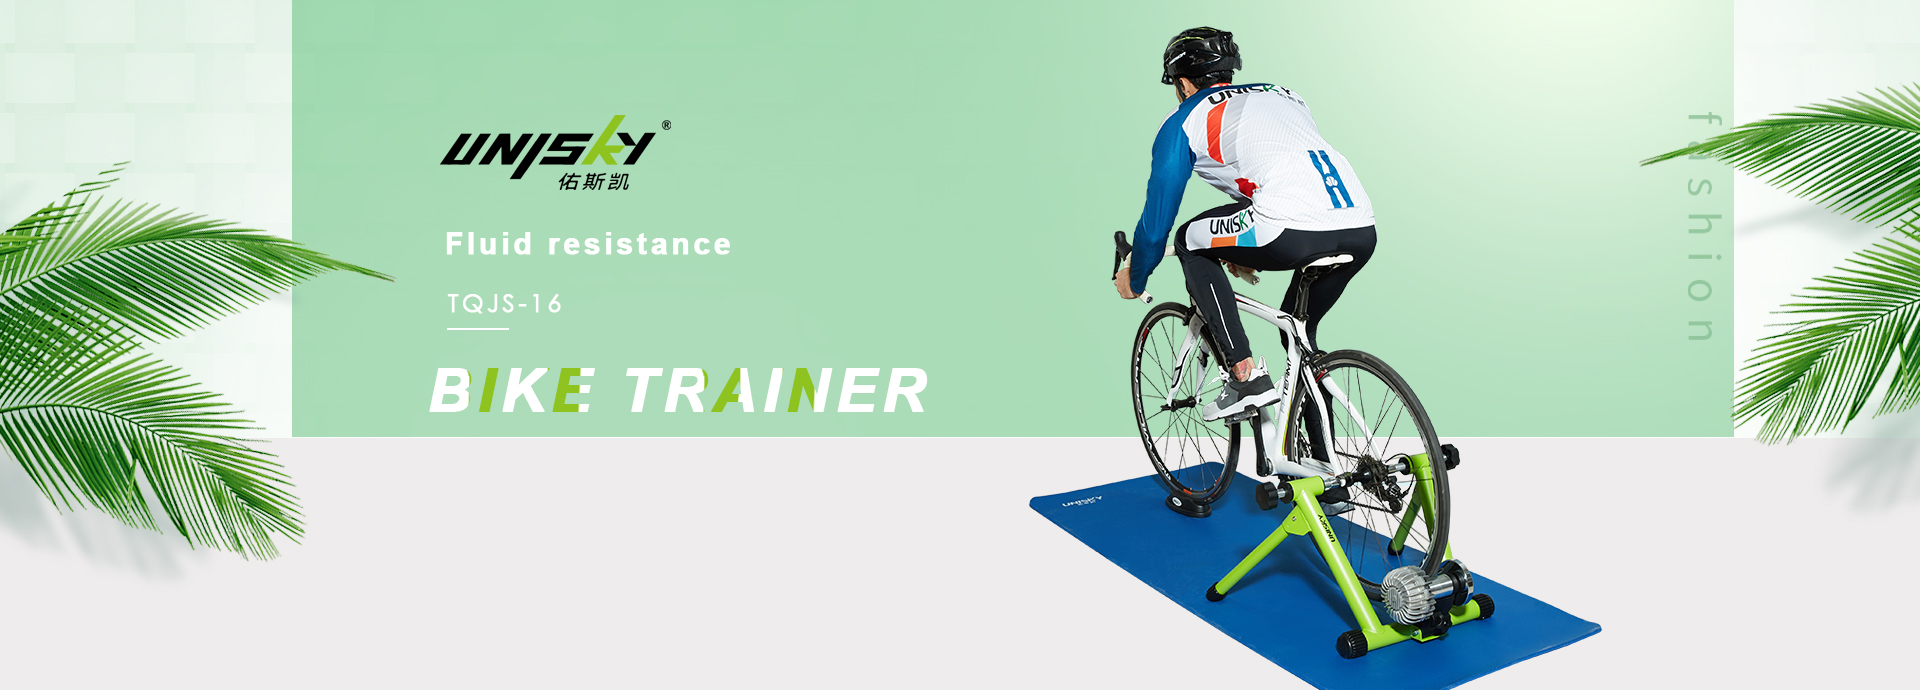 bike resistance trainer